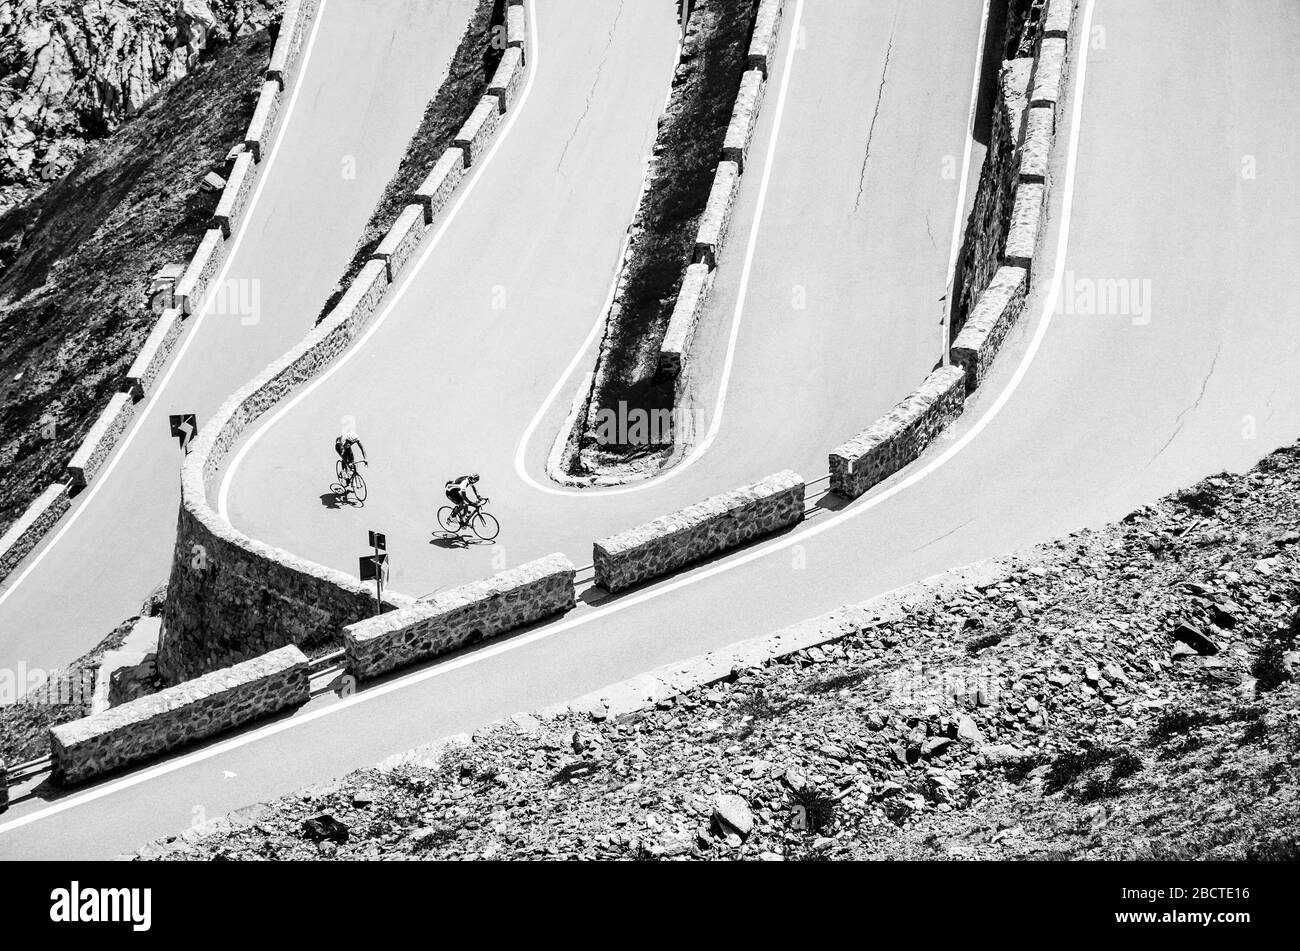 Biker on the road - Cyclist photo. Tour, Italy, Passo dello Stelvio Stock Photo